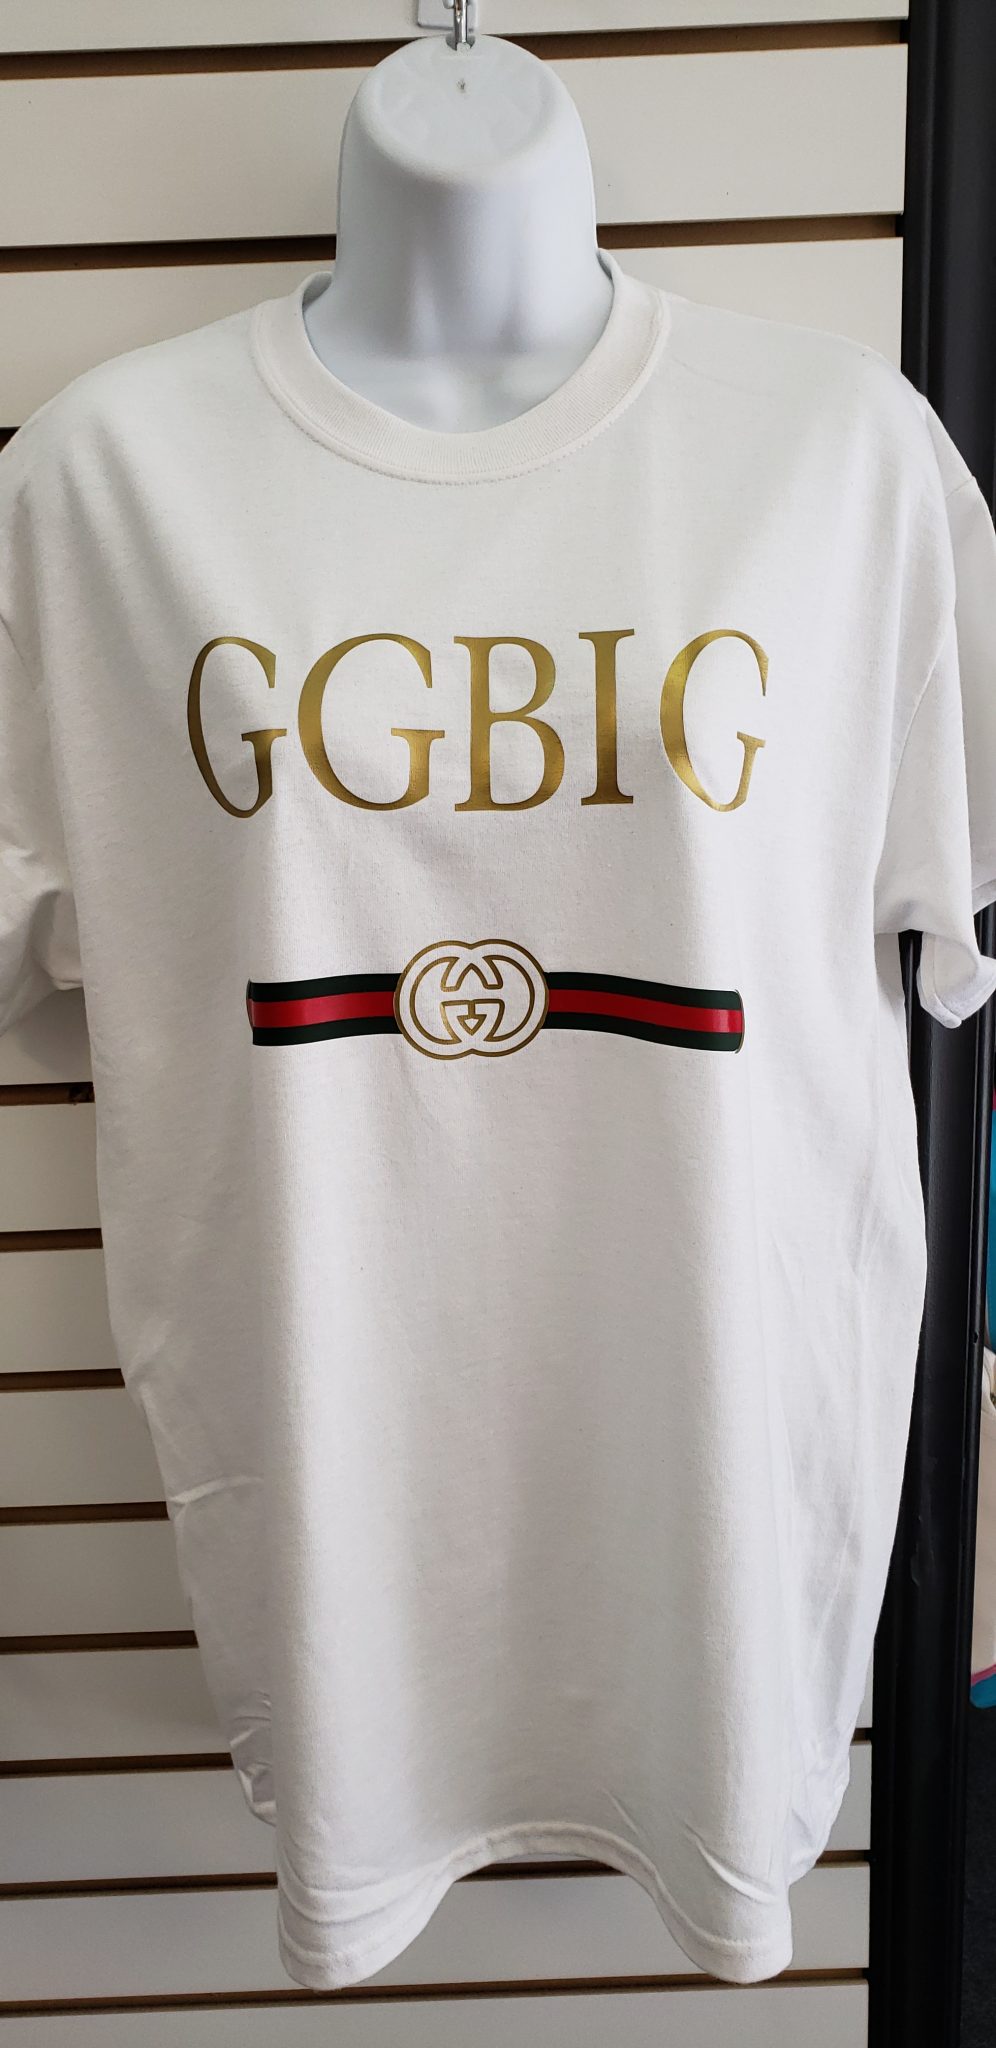 gucci inspired shirts